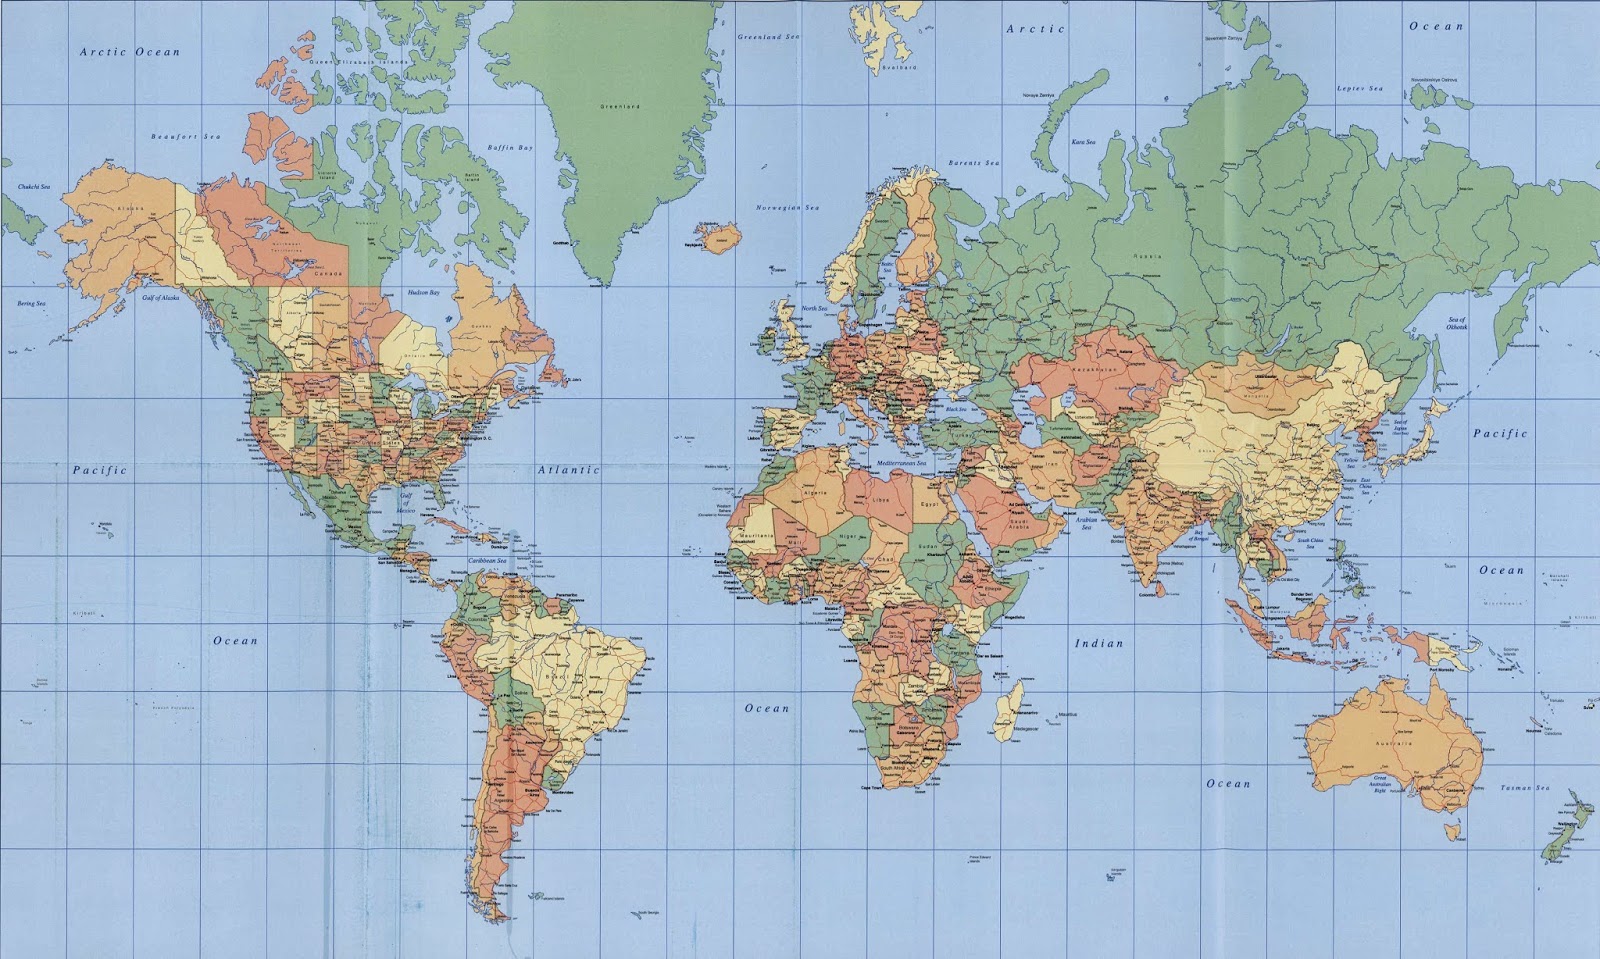 Peta Dunia Lengkap Dengan Nama Negara Dan Sejarah Pembuatannya Mutualist Us